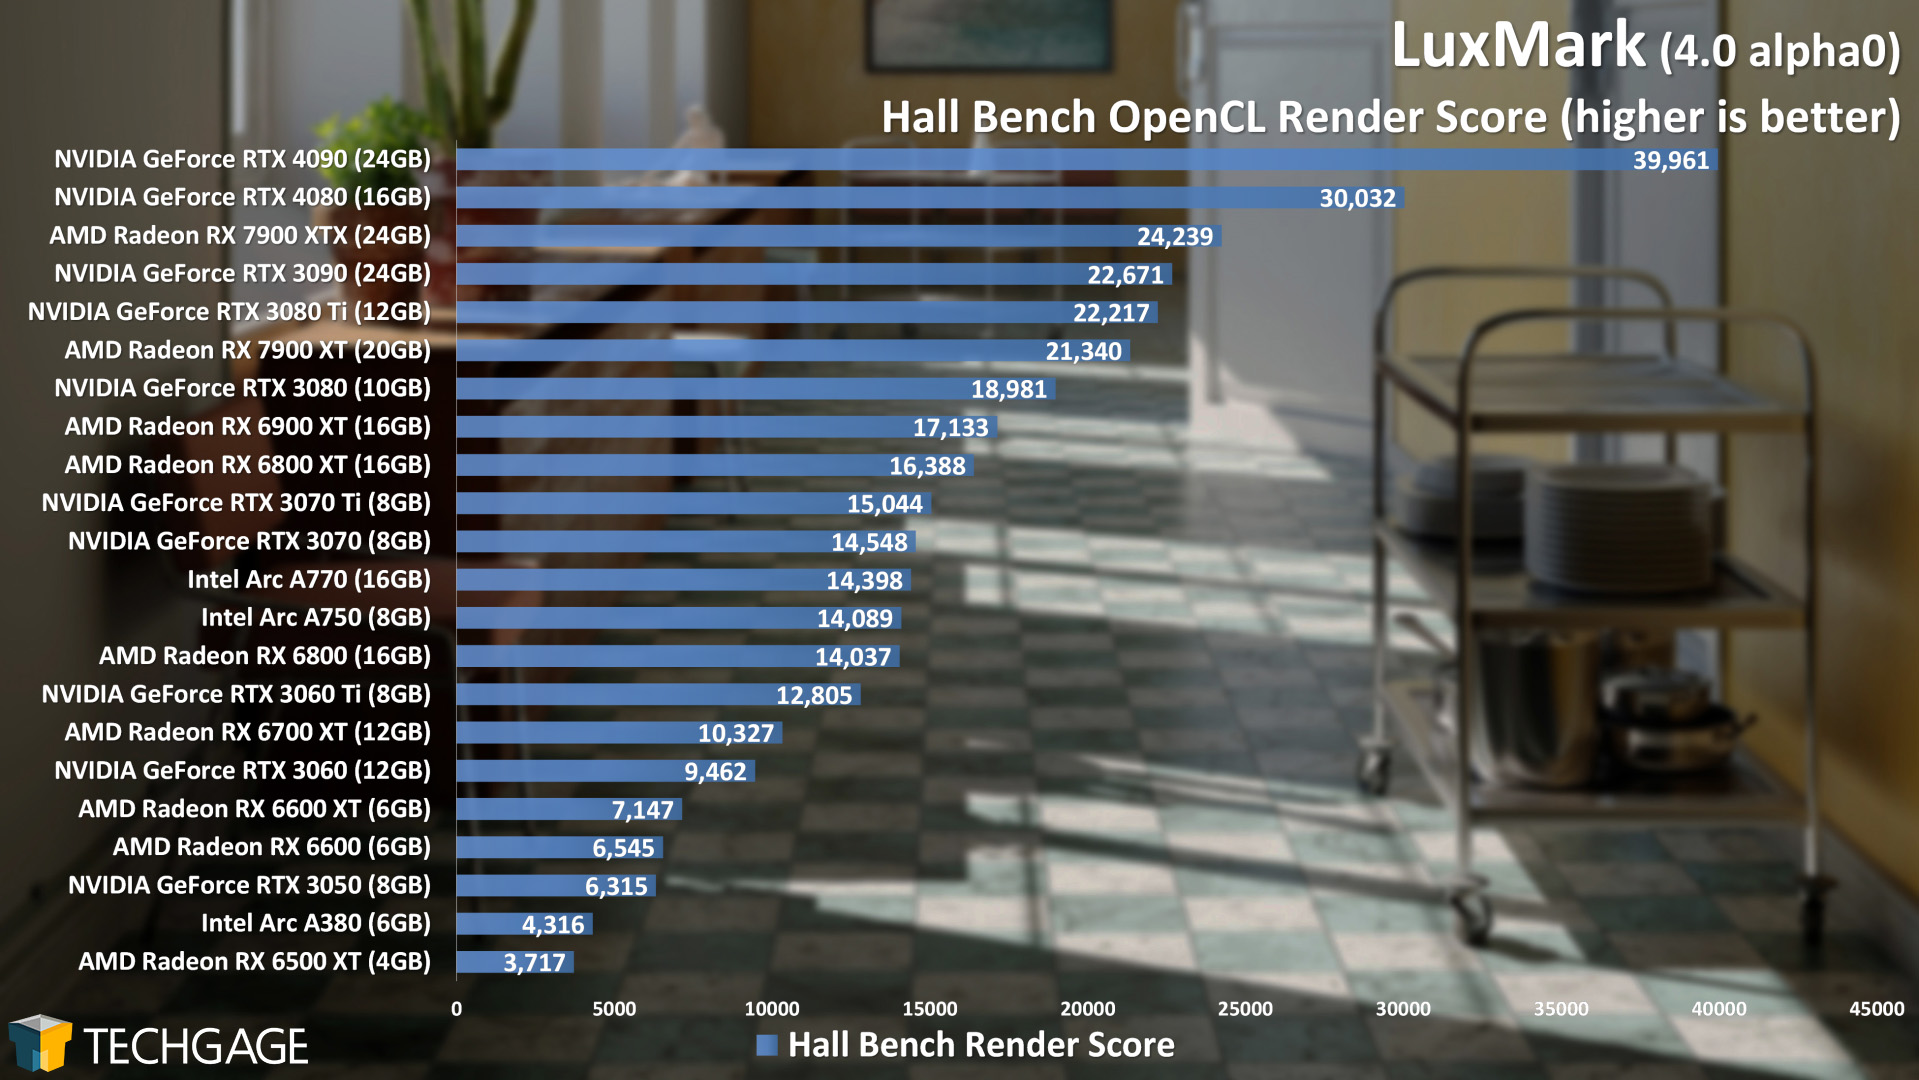 LuxMark Performance - Hall Bench OpenCL Score (AMD Radeon RX 7900 XT and XTX)